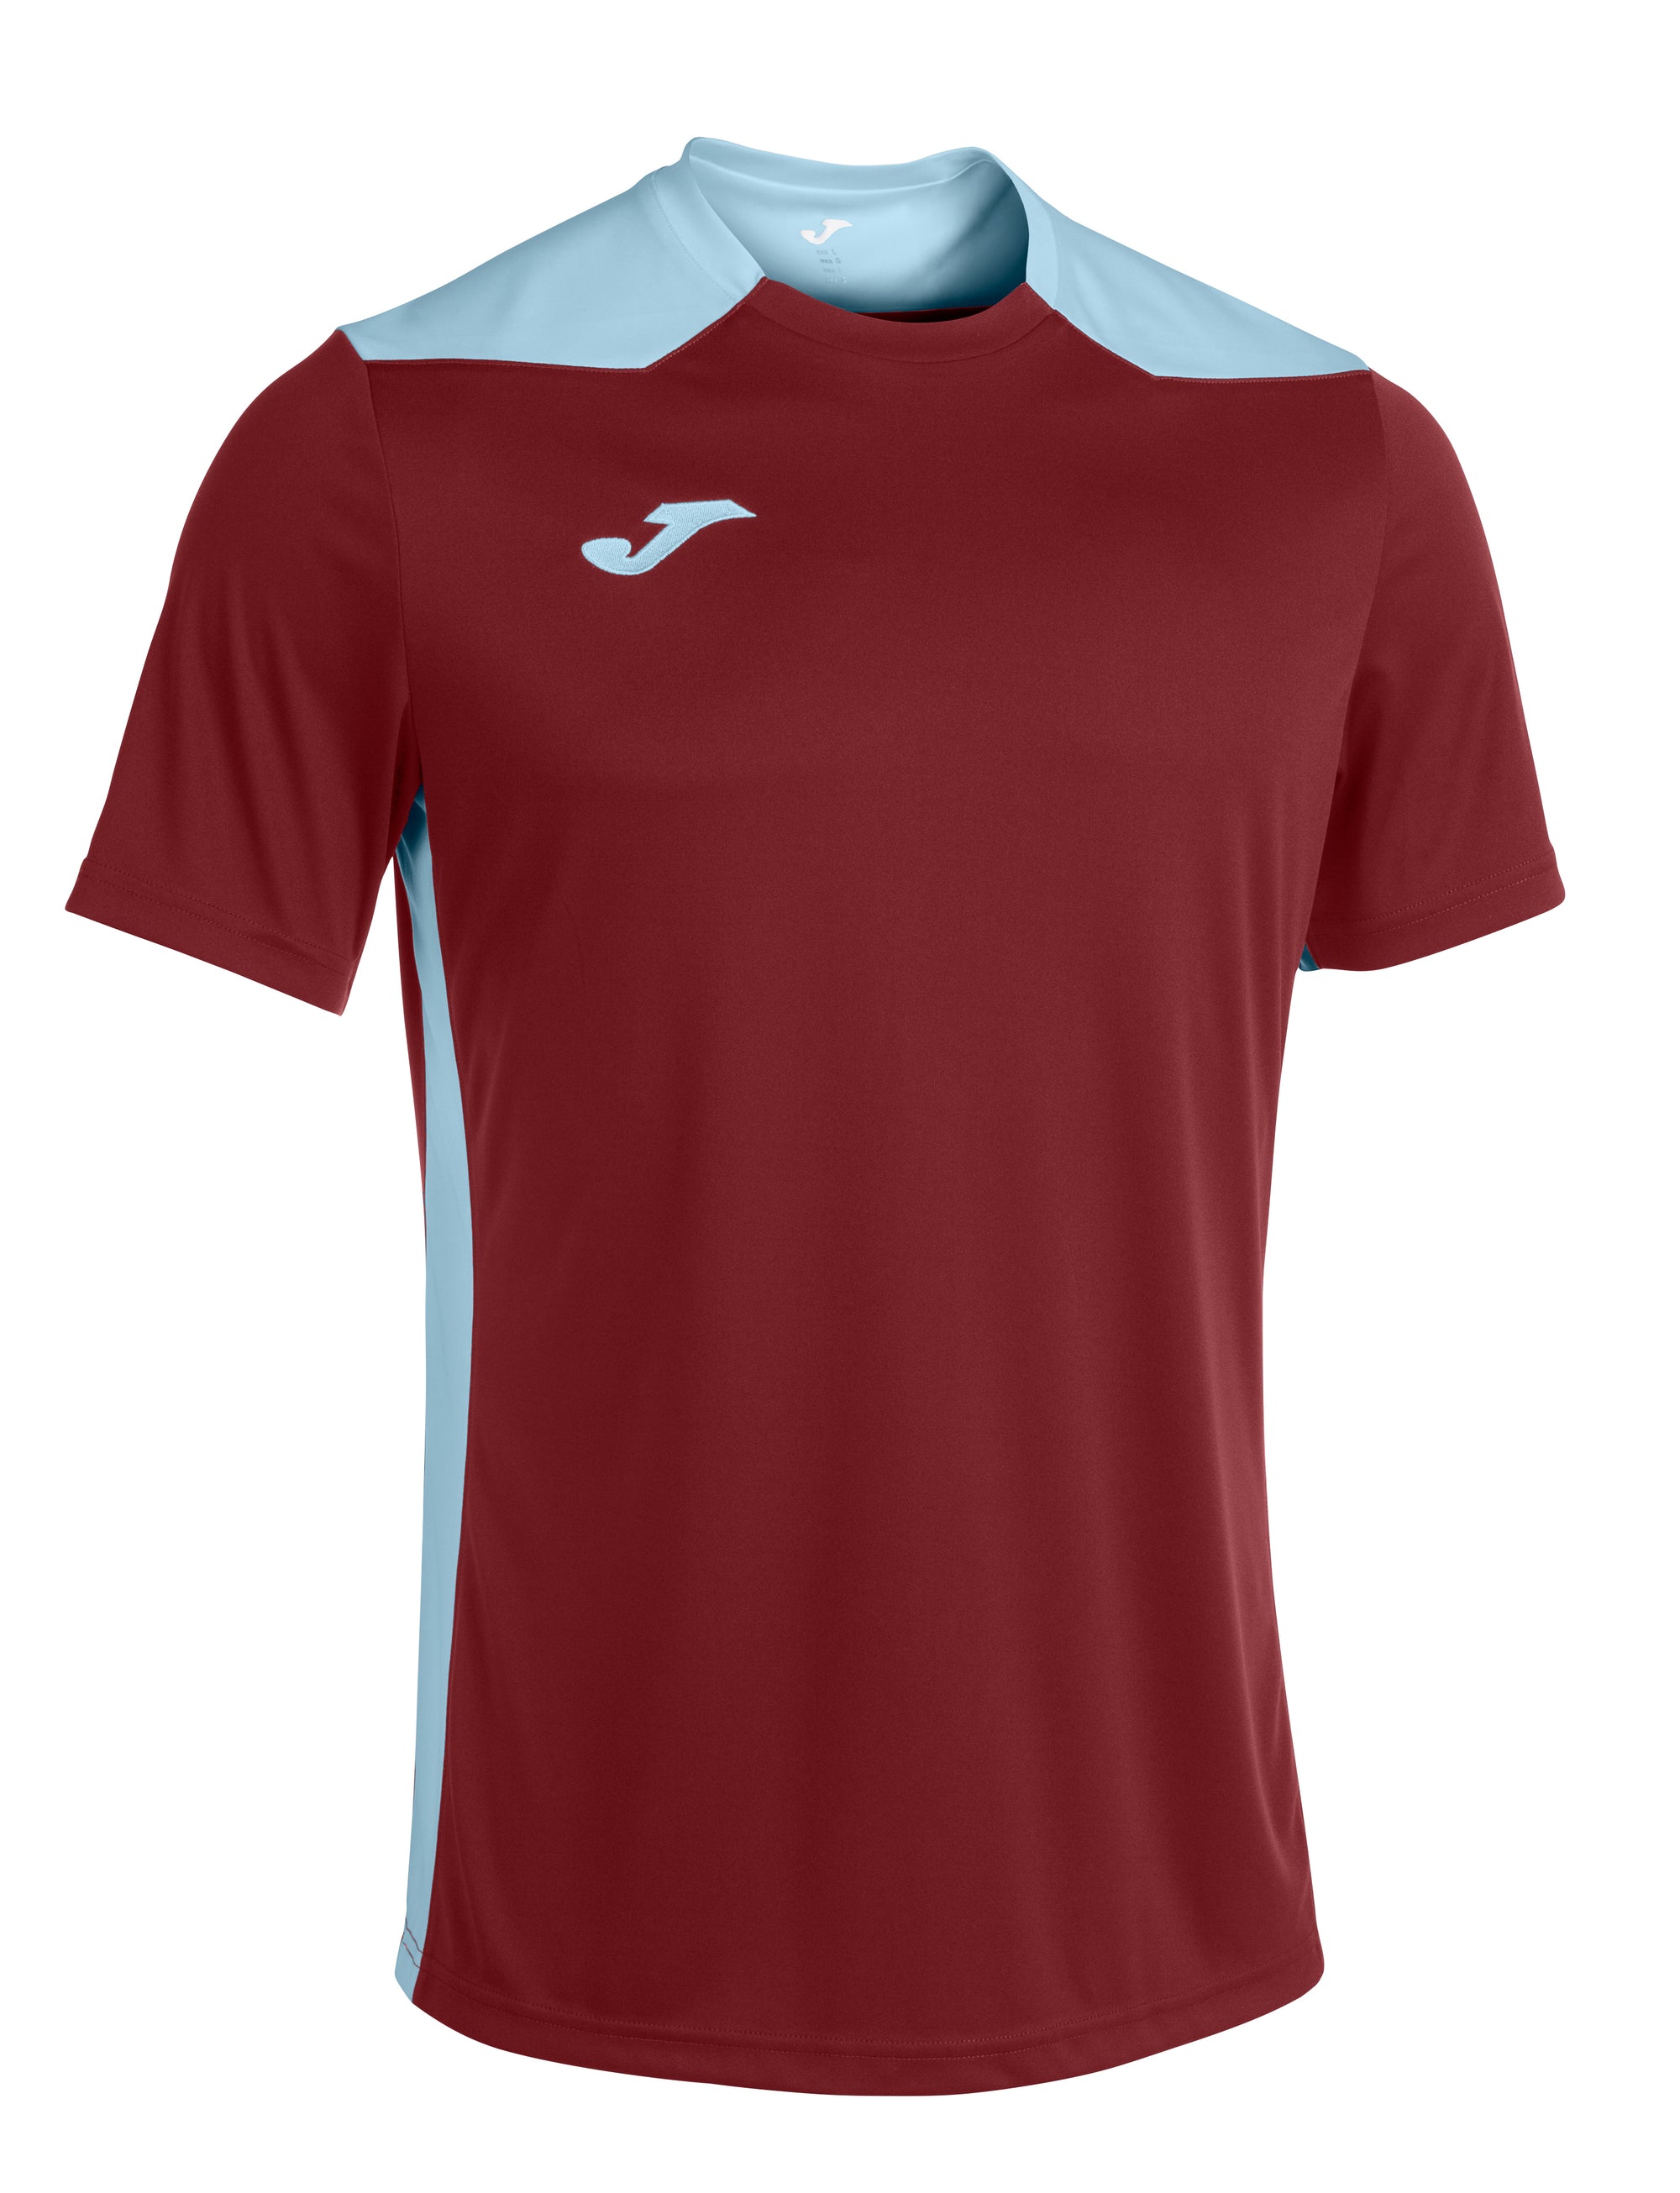 Joma Championship VI Short Sleeved T-Shirt - Burgundy/Sky